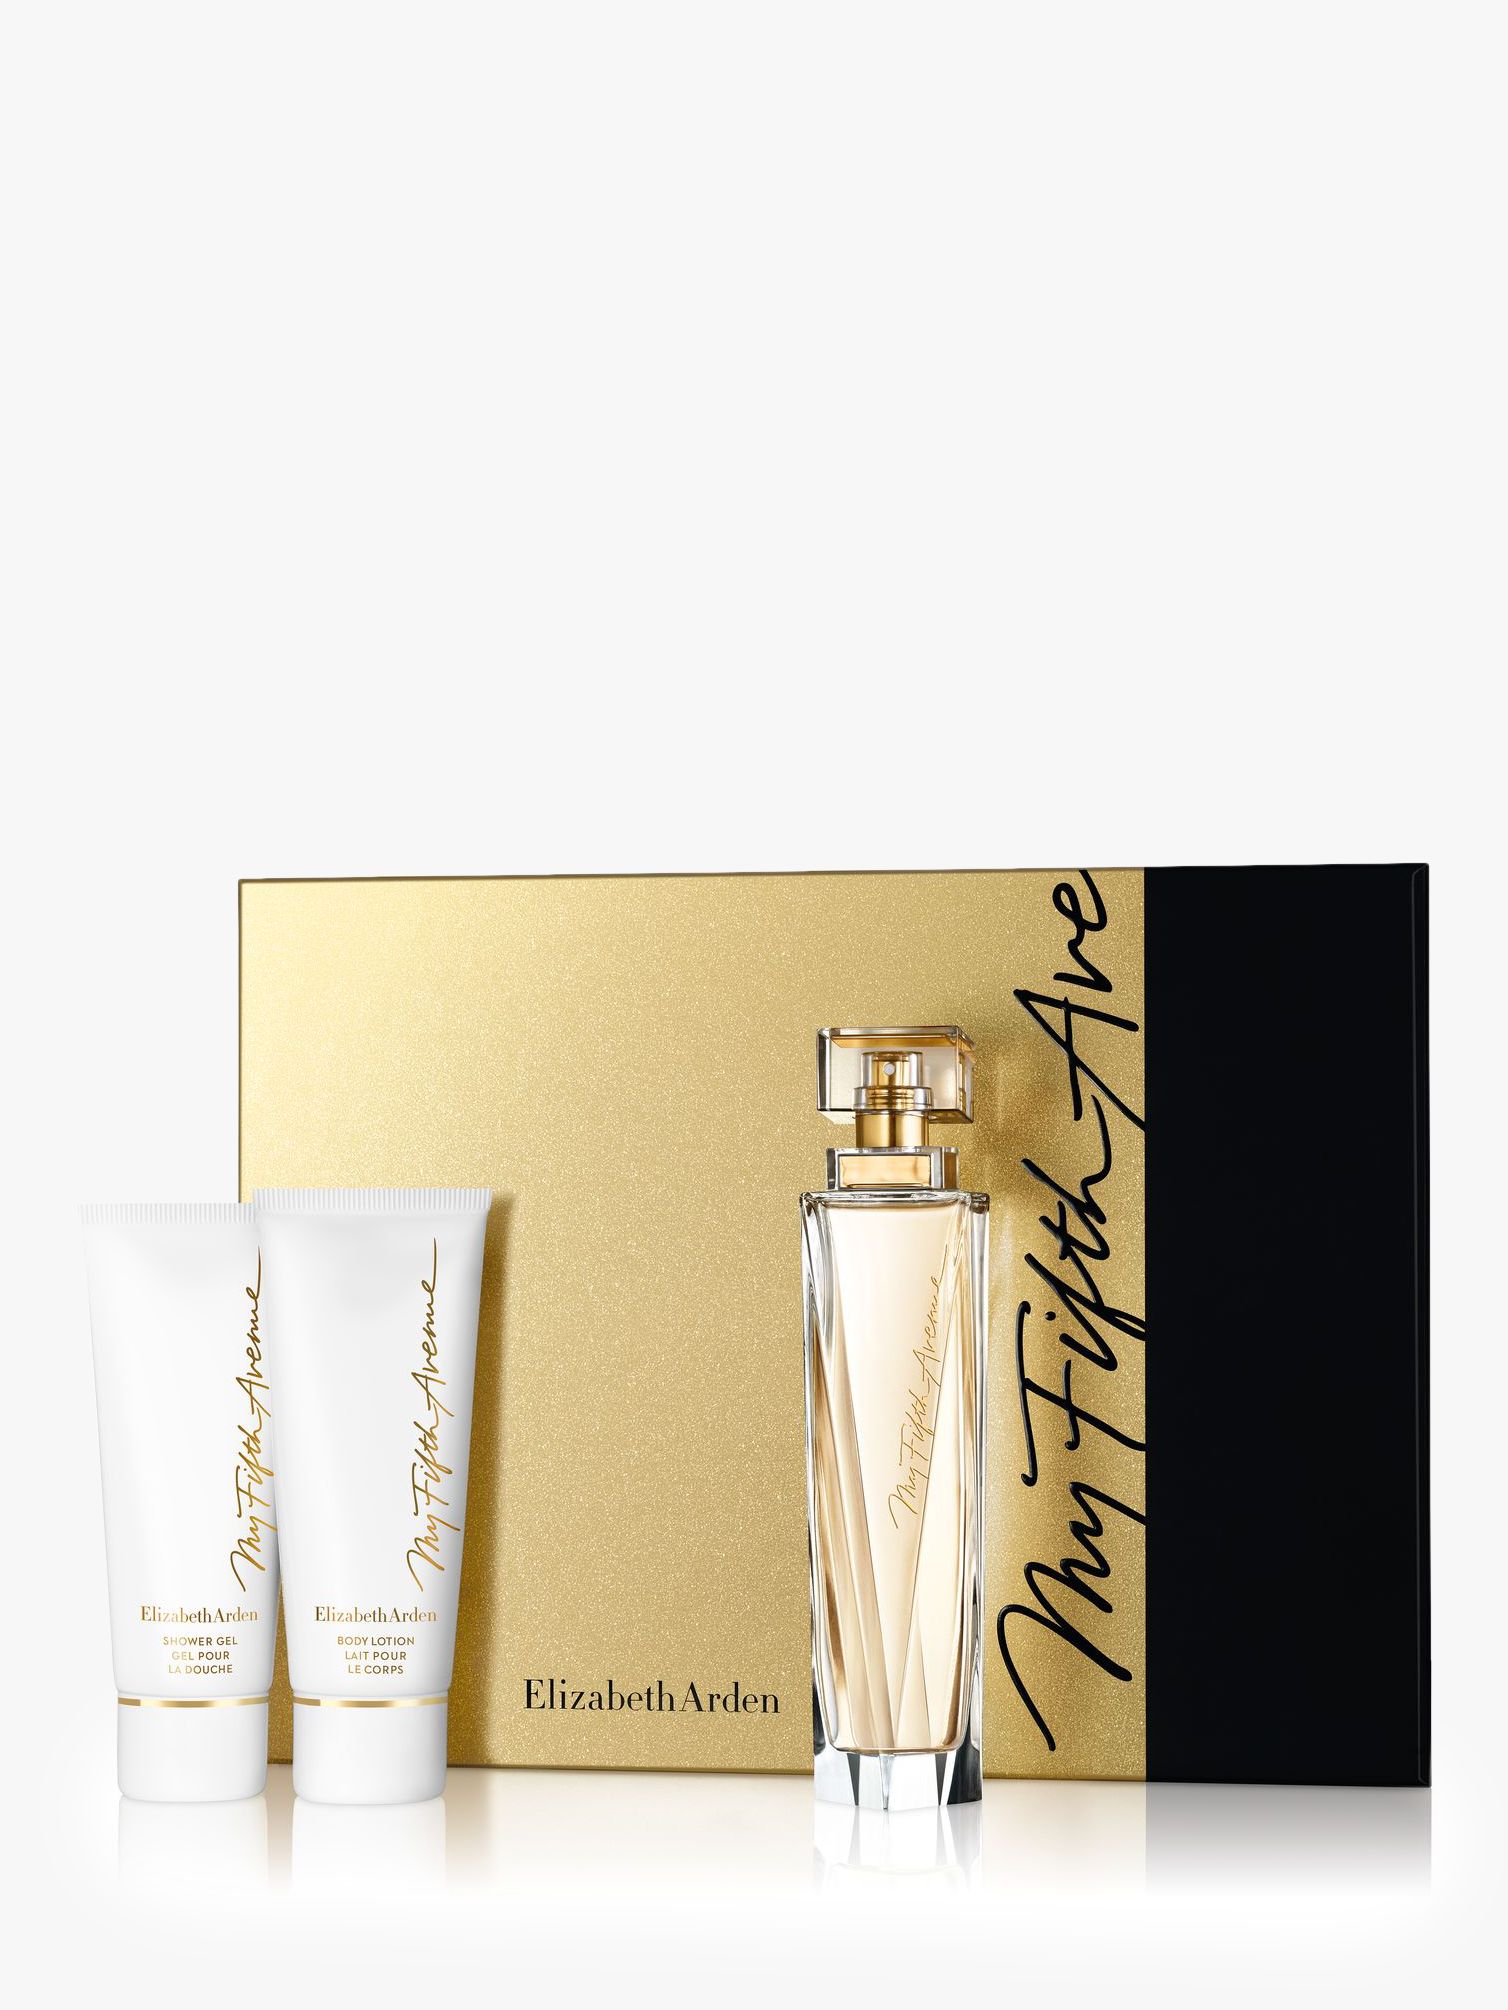 Elizabeth Arden My 5th Avenue 100ml Eau de Parfum Fragrance Gift Set